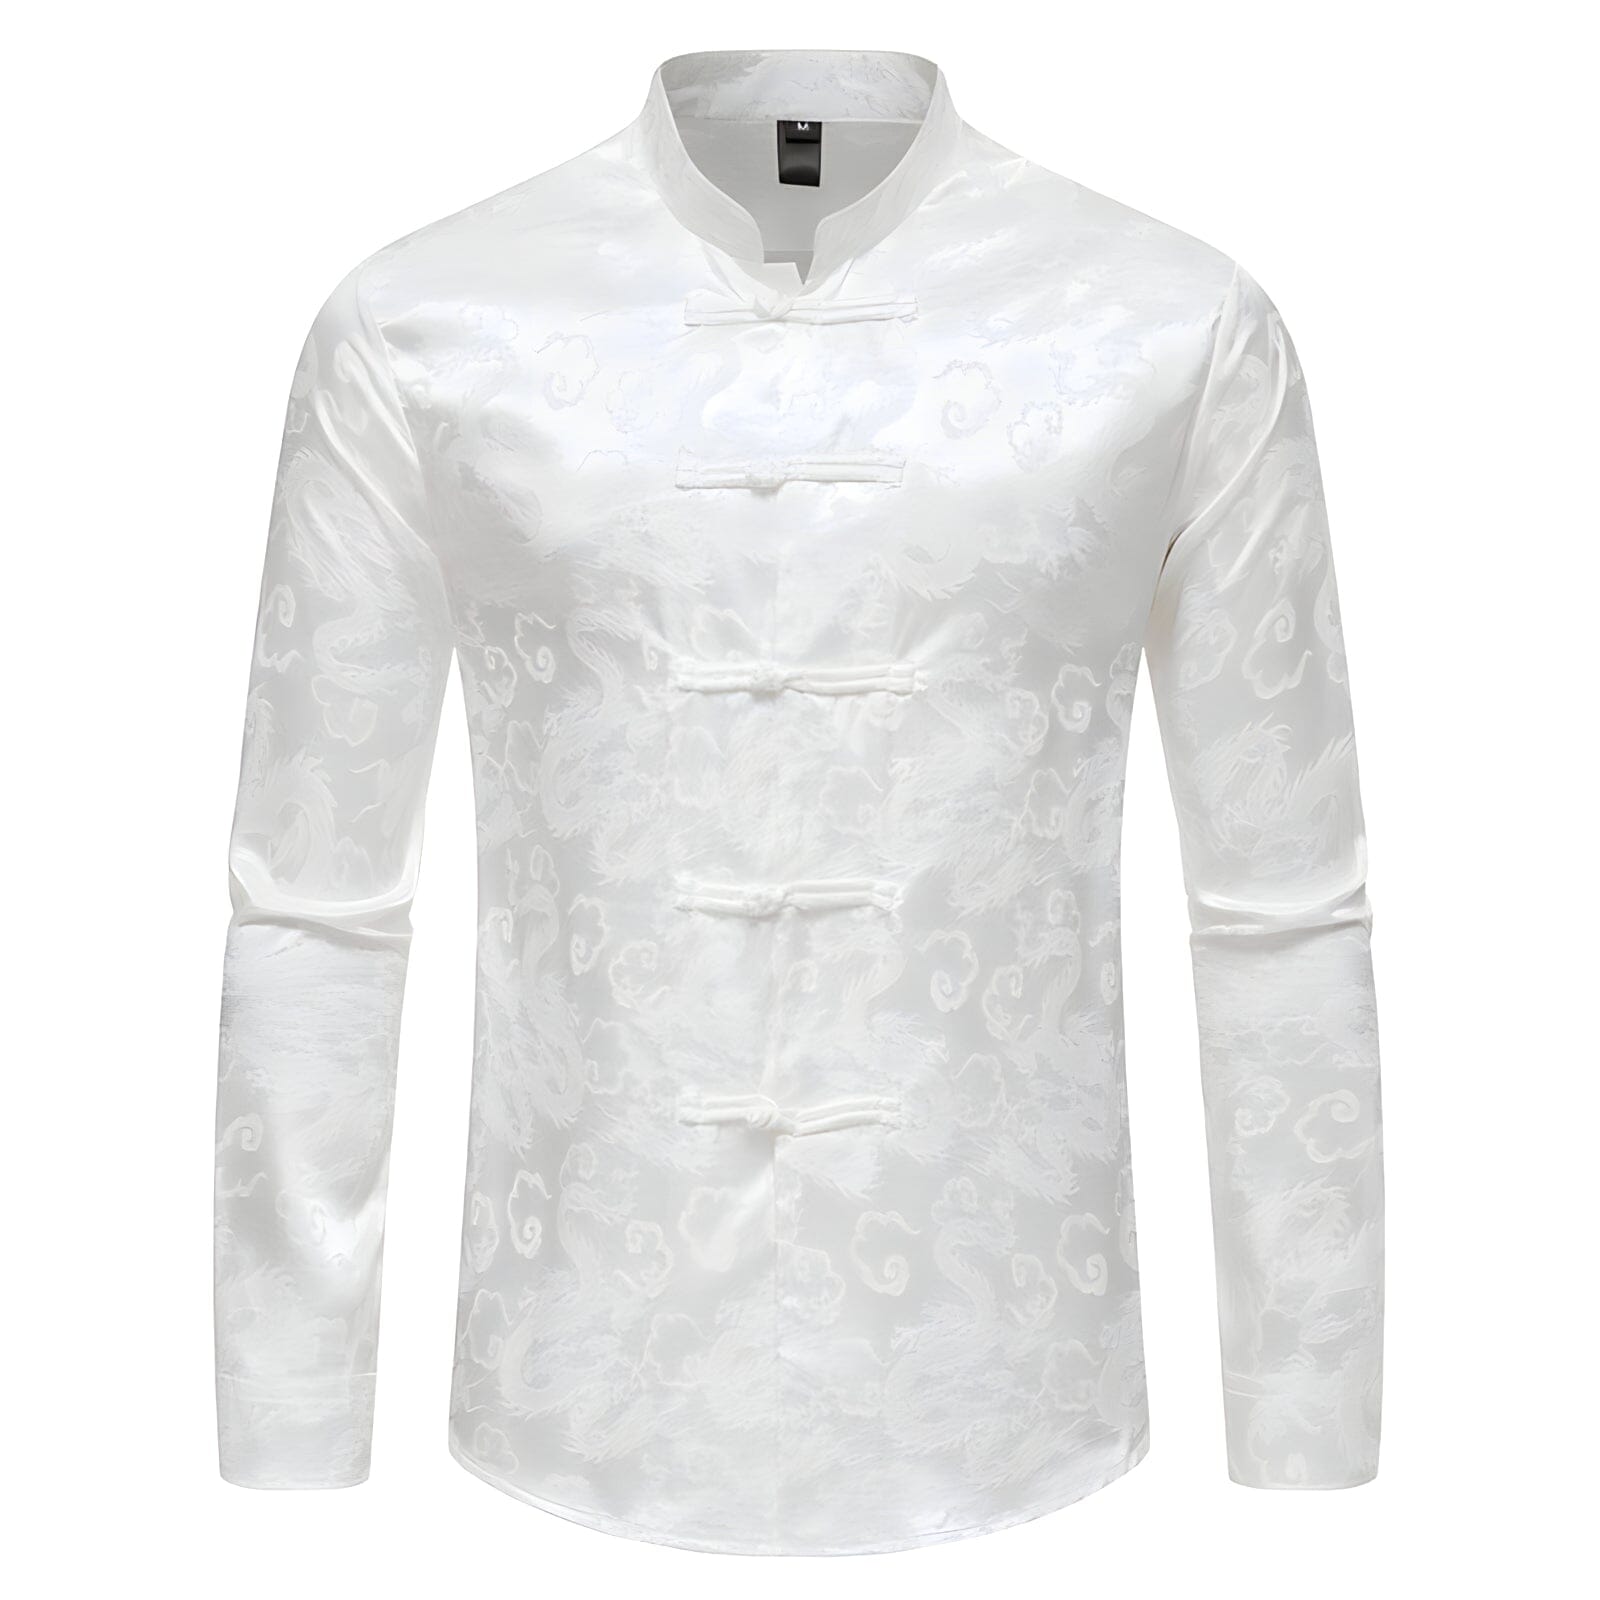 The Dragon Mandarin Collar Long Sleeve Shirt - Multiple Colors WD Styles Cream S 